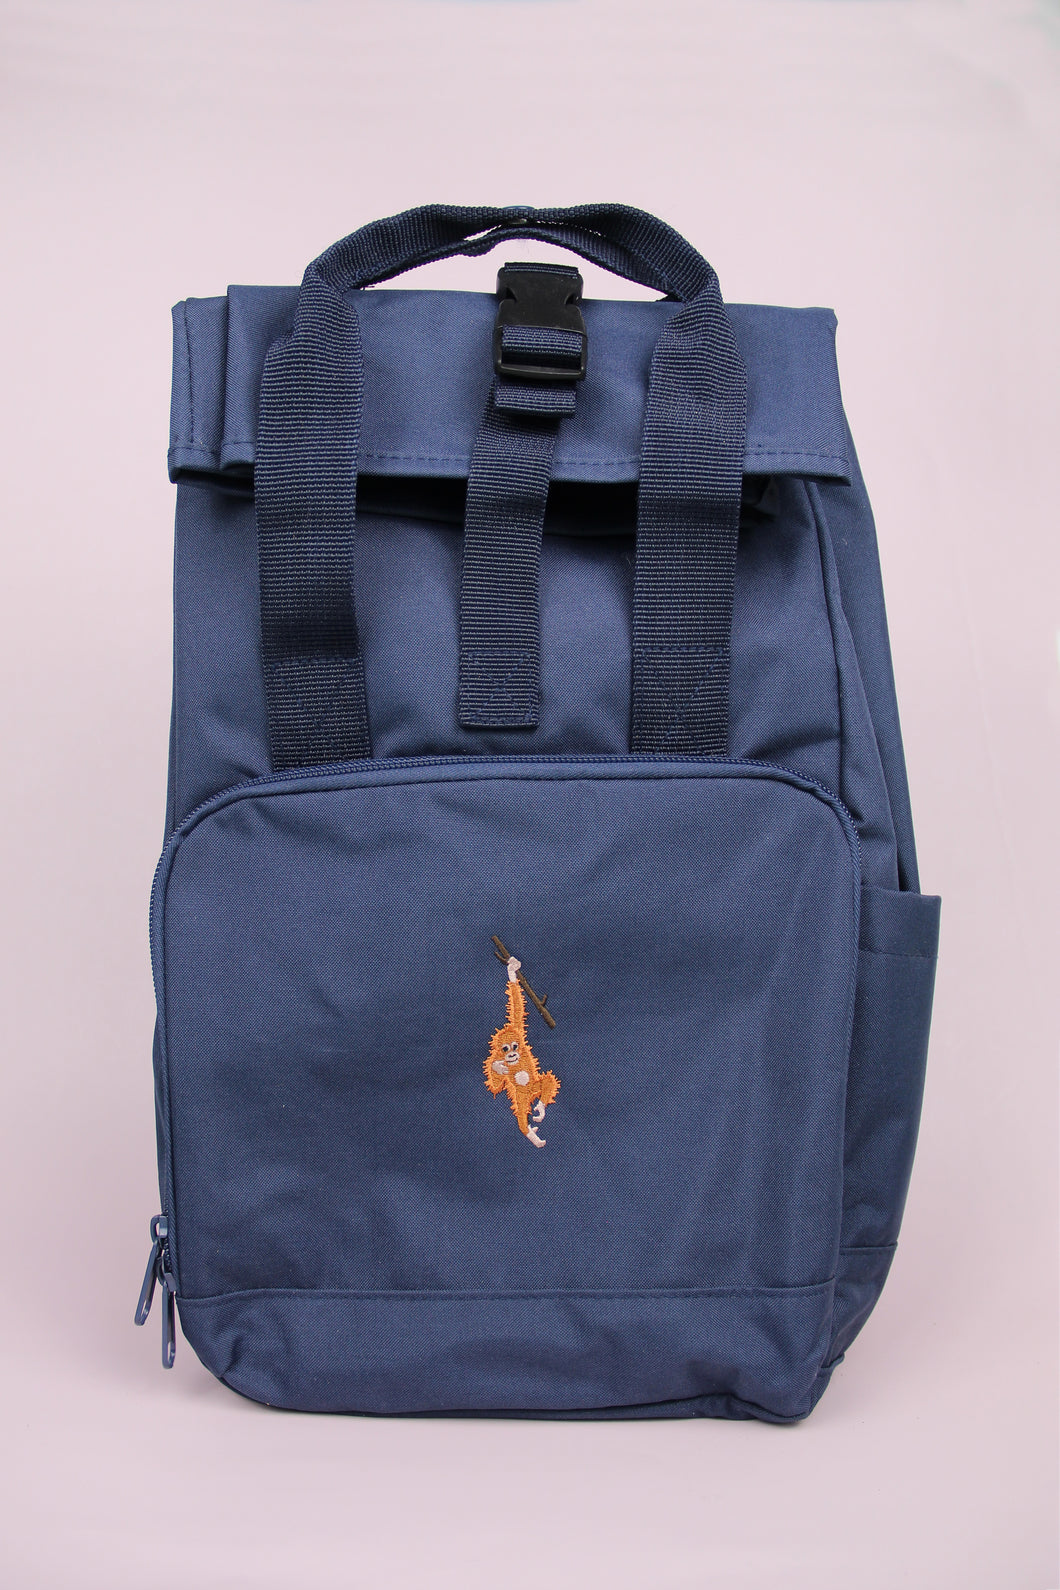 Orangutan Recycled Backpack - Navy